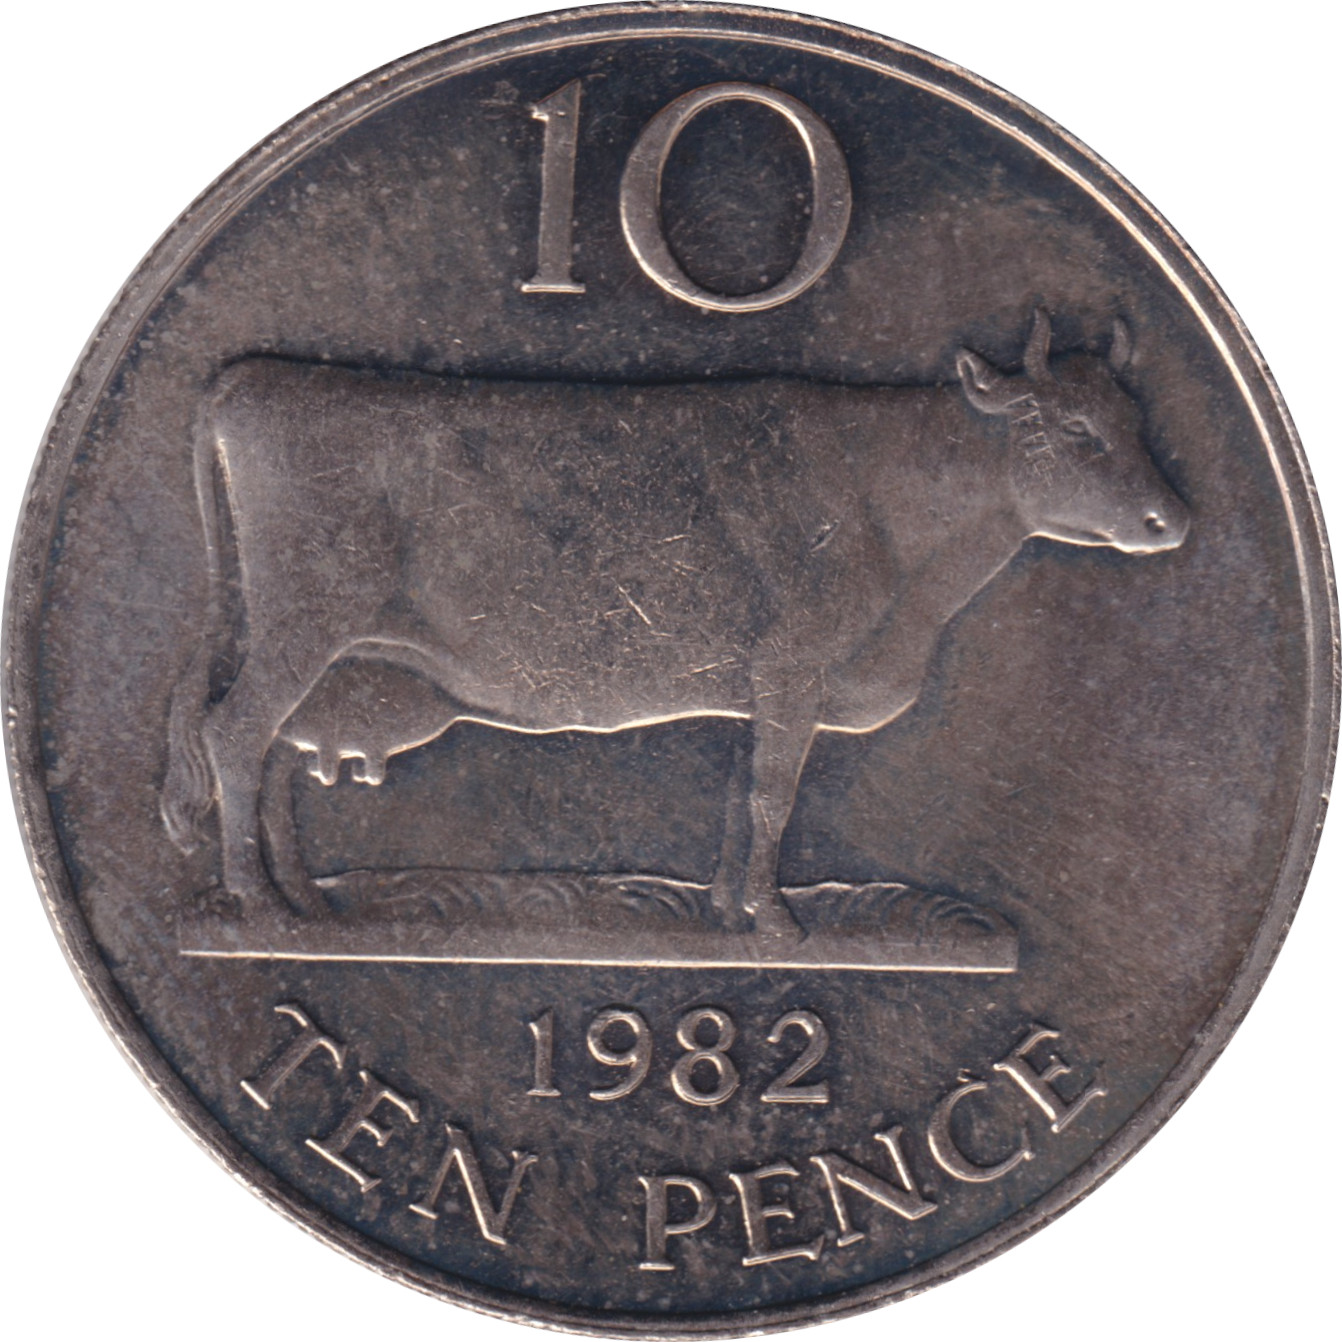 10 pence - Vache - Ten pence